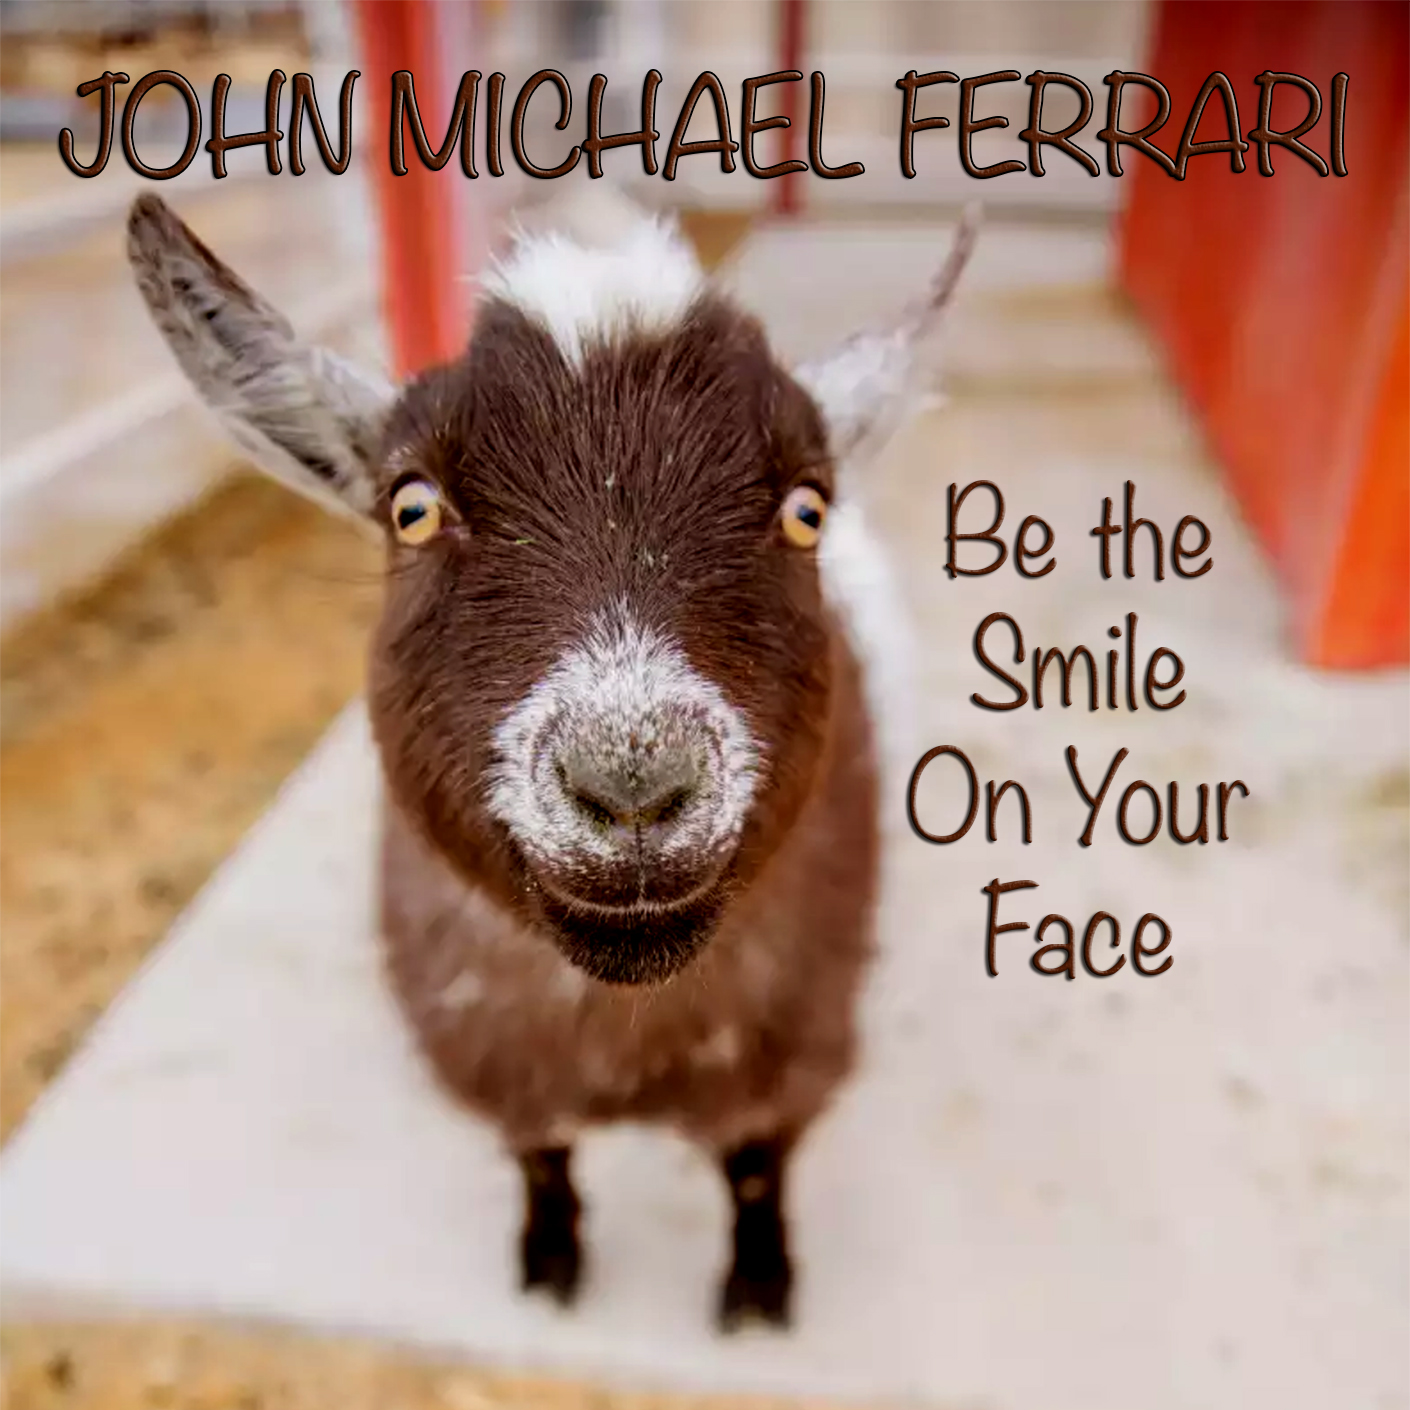 2020 album by John Michael Ferrari